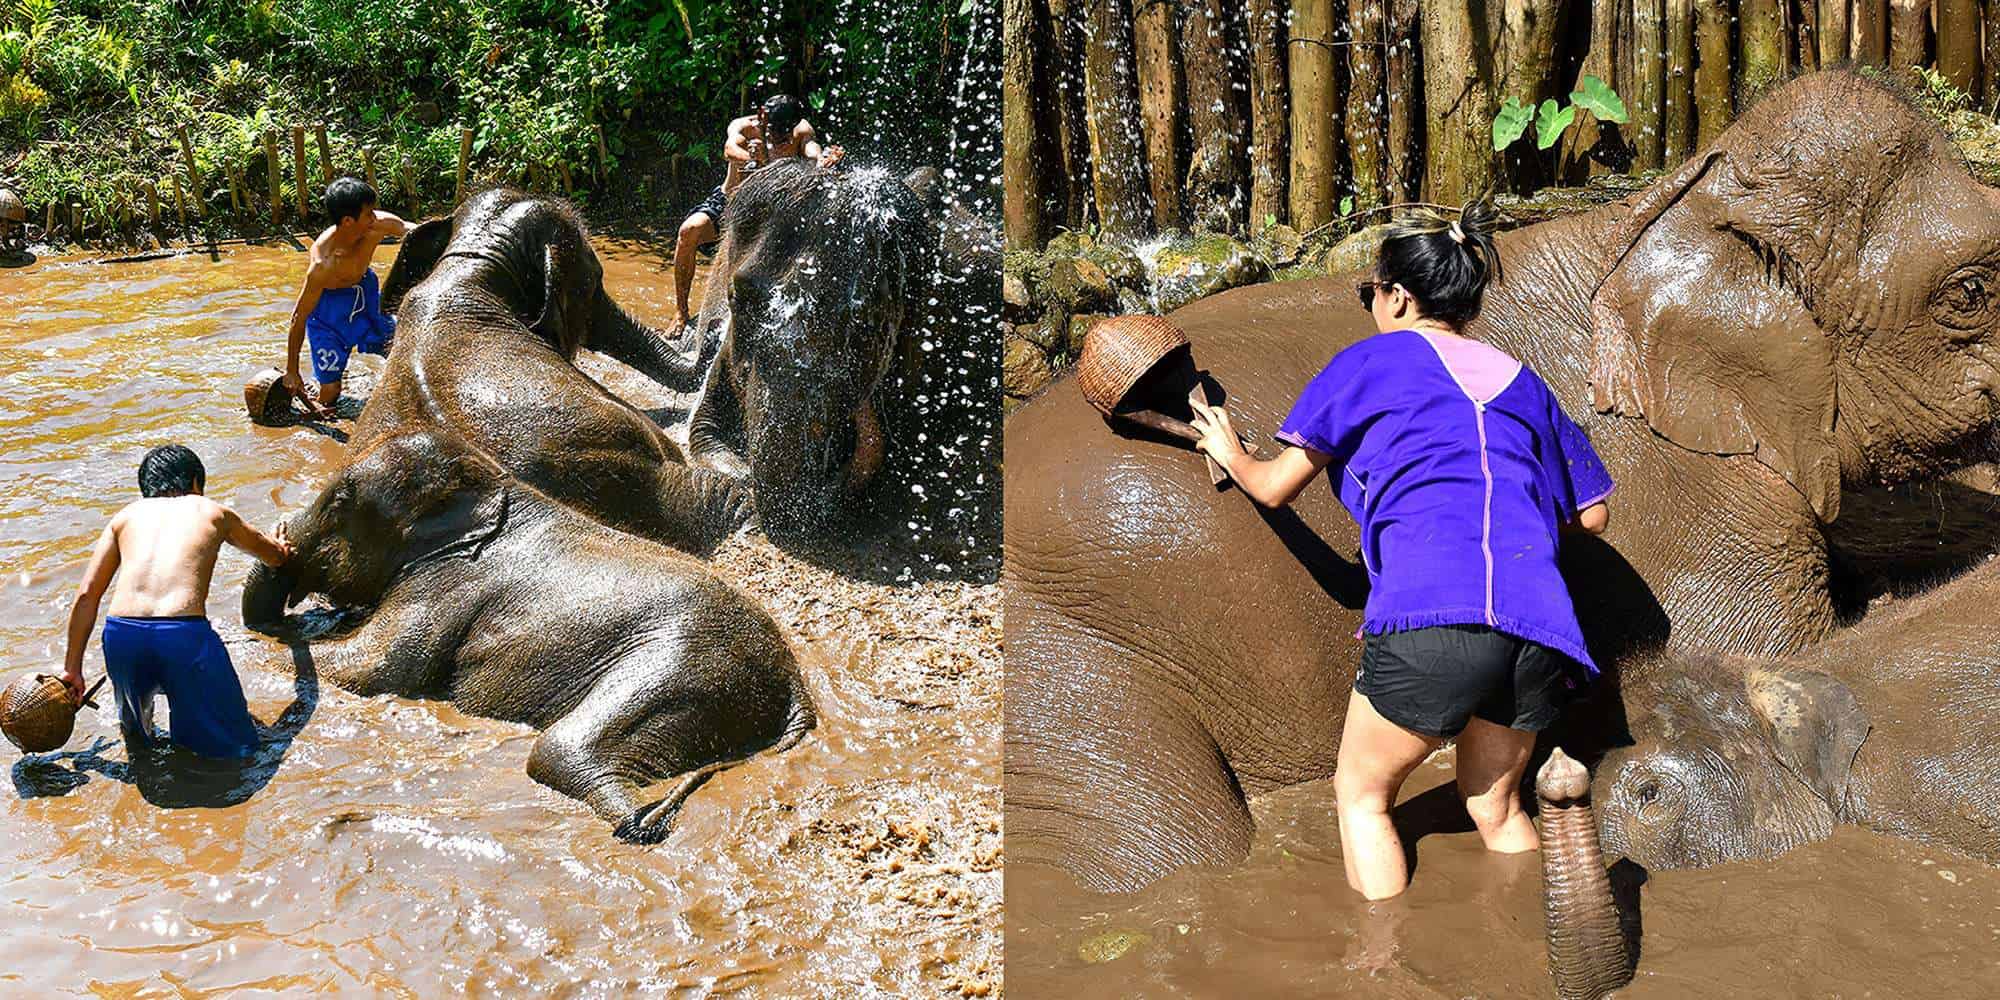 Walk with elephants - mahouts giving elephants water bath, guest giving elephant mud bath.